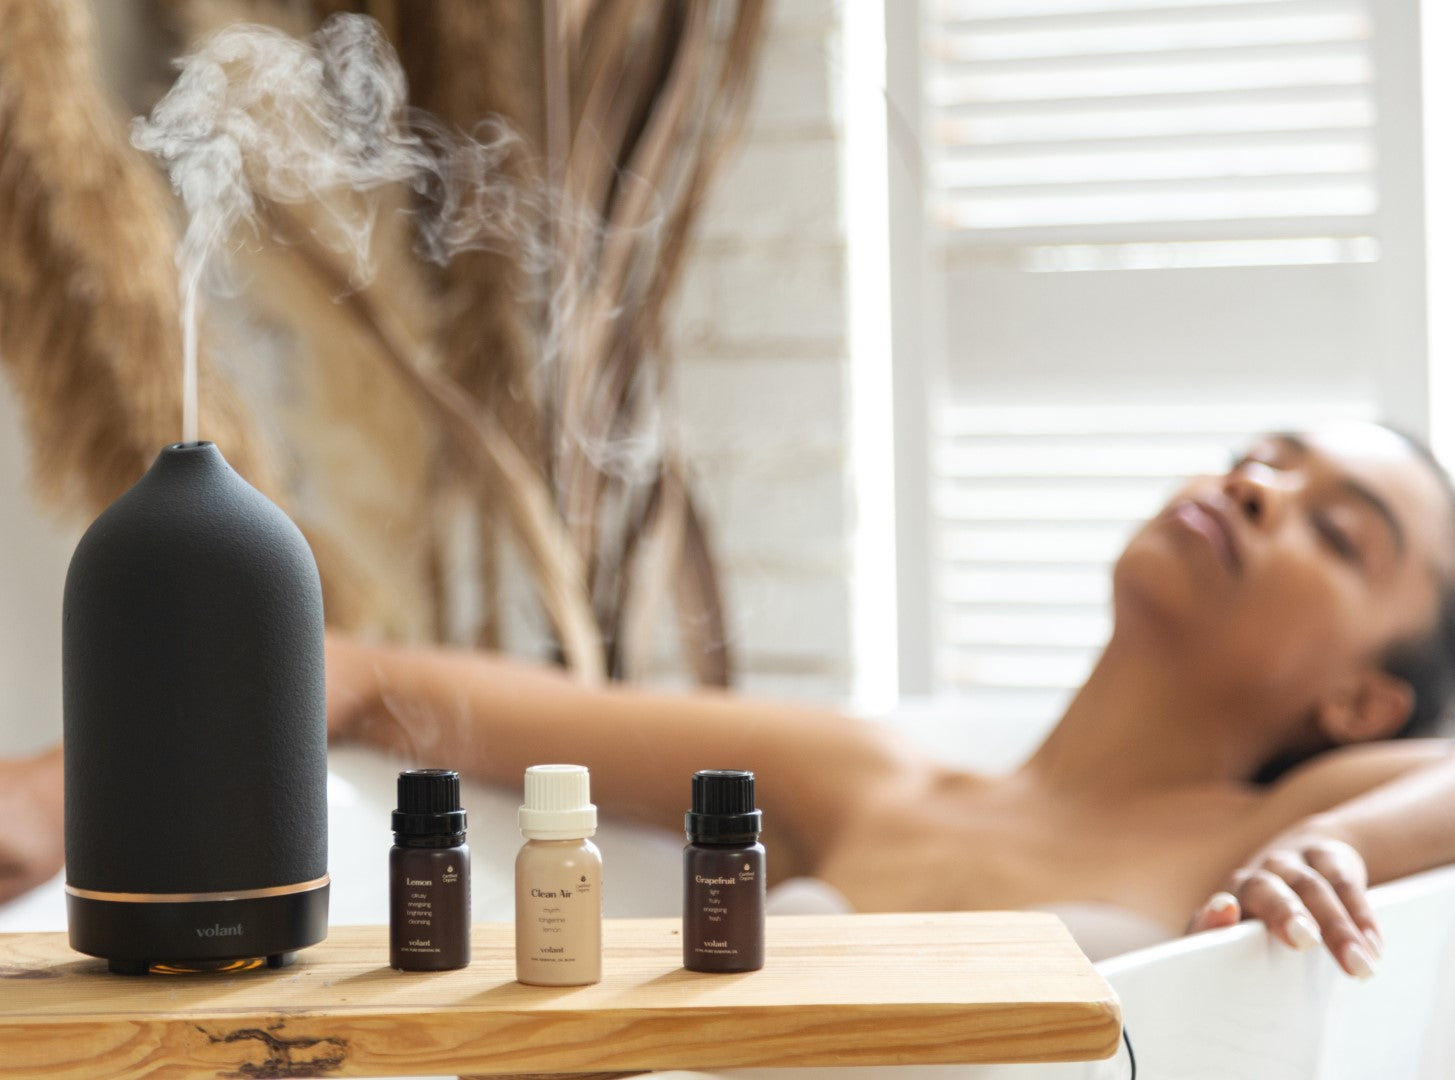 Best essential oils for detox bath - Amazing tips